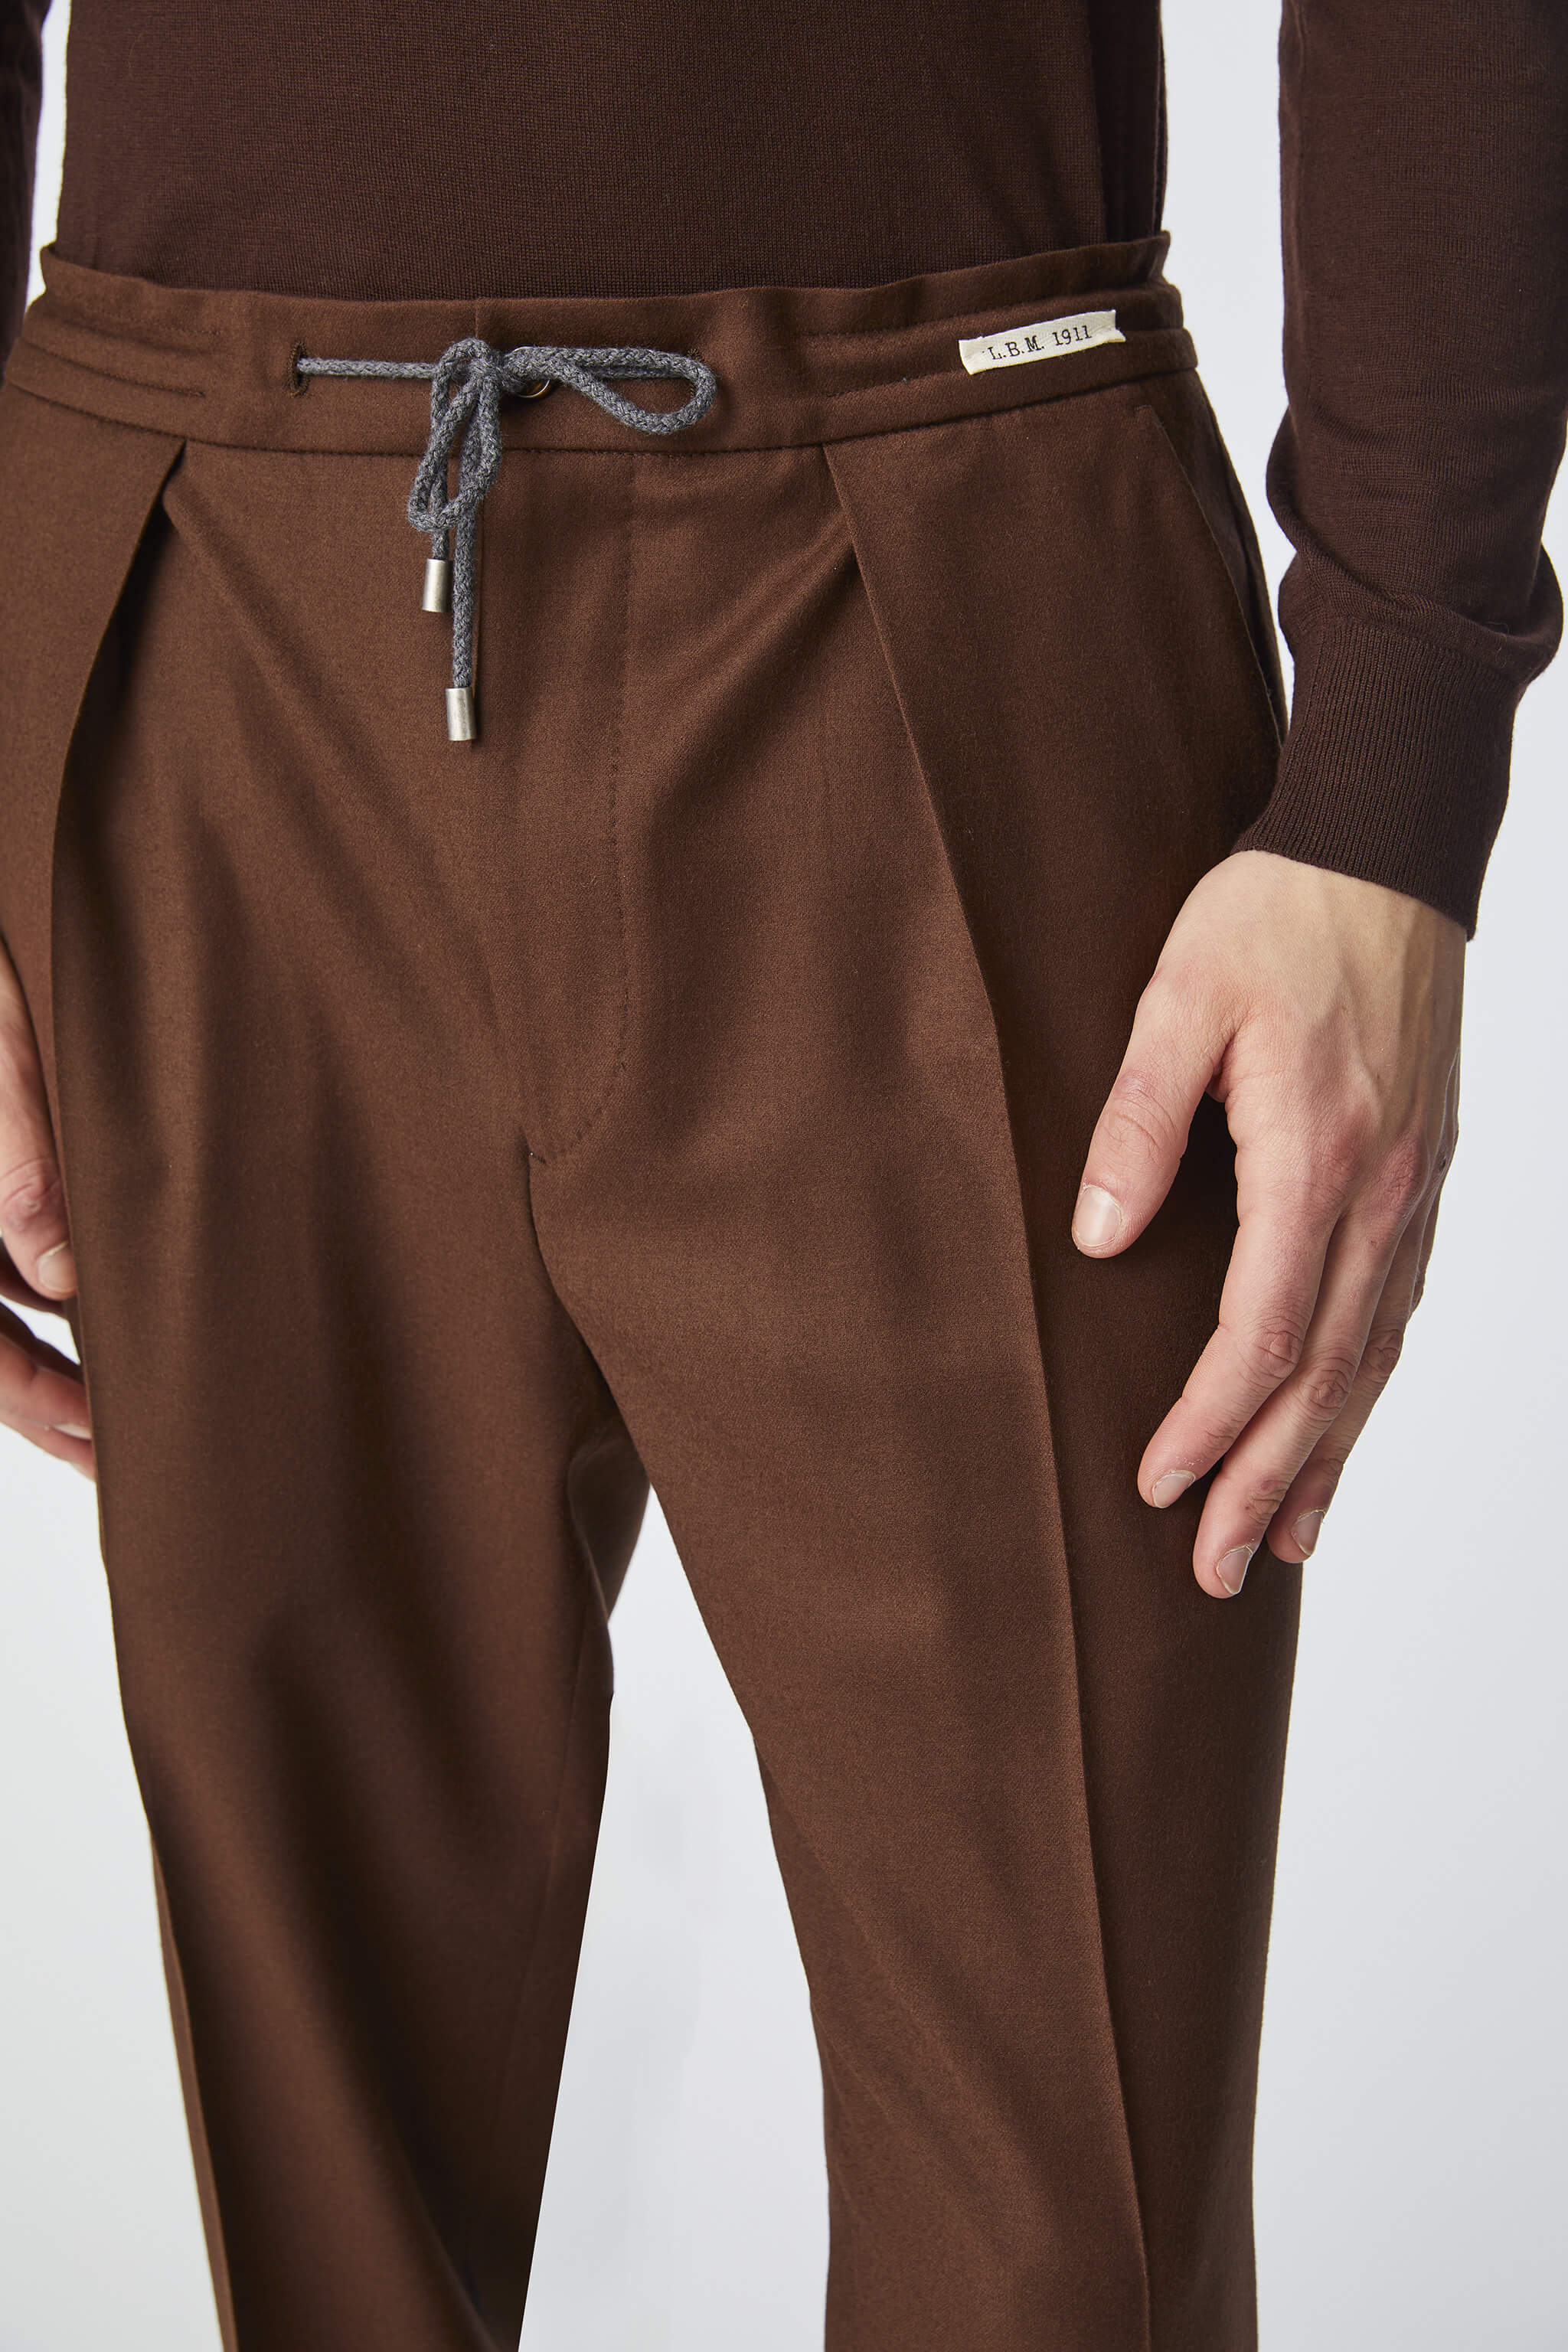 LESTER pants in brown